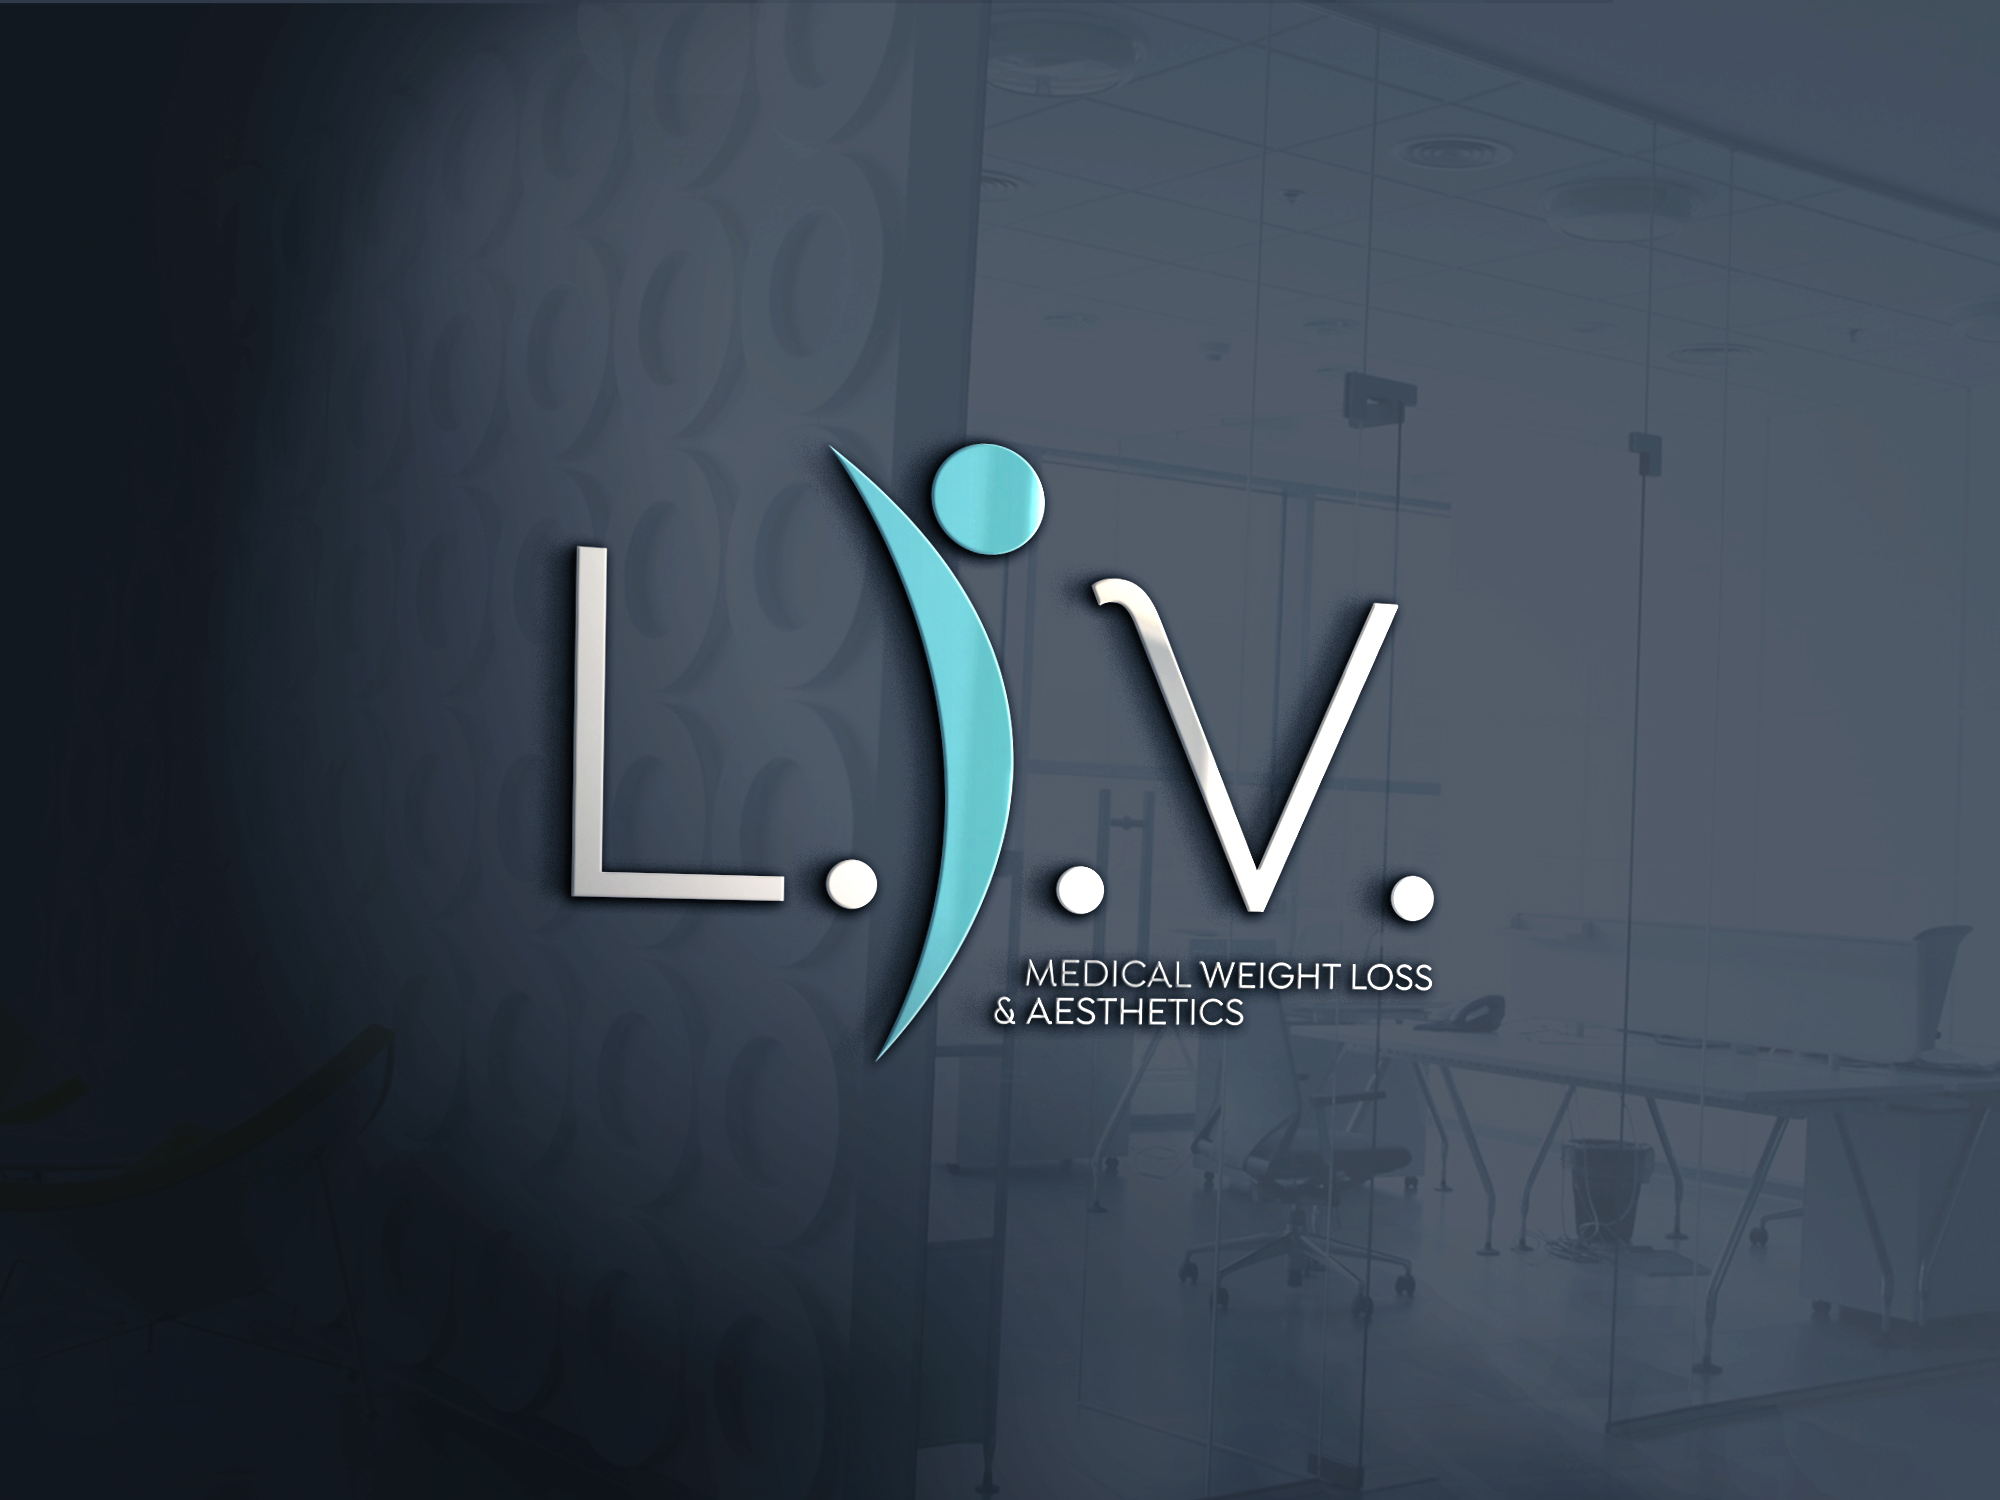 LIV Medical Weight Loss & Aesthetics's Logo